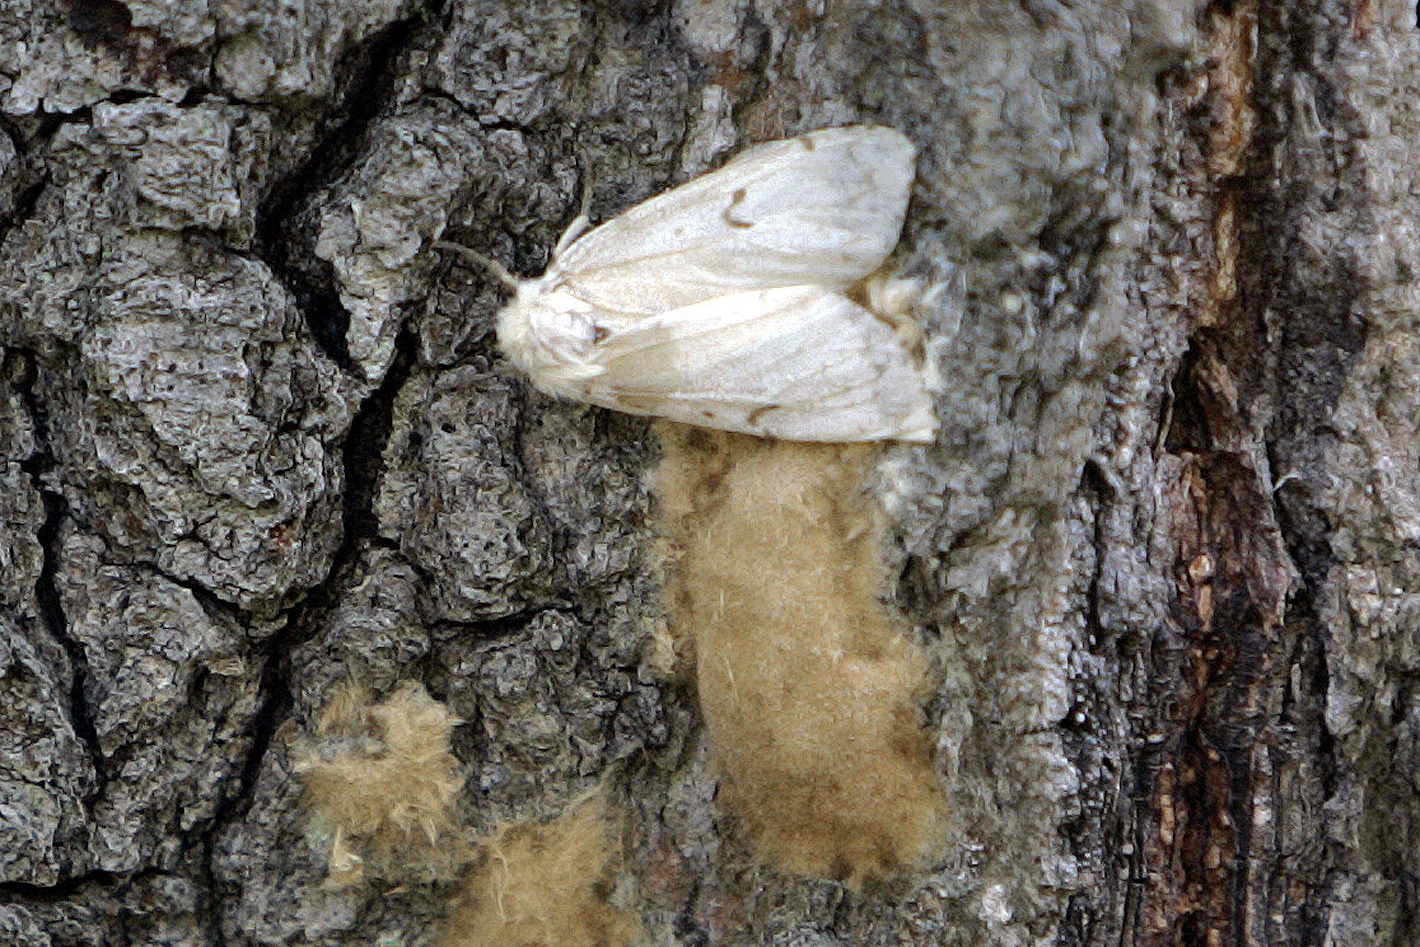 A spongy moth on a tree